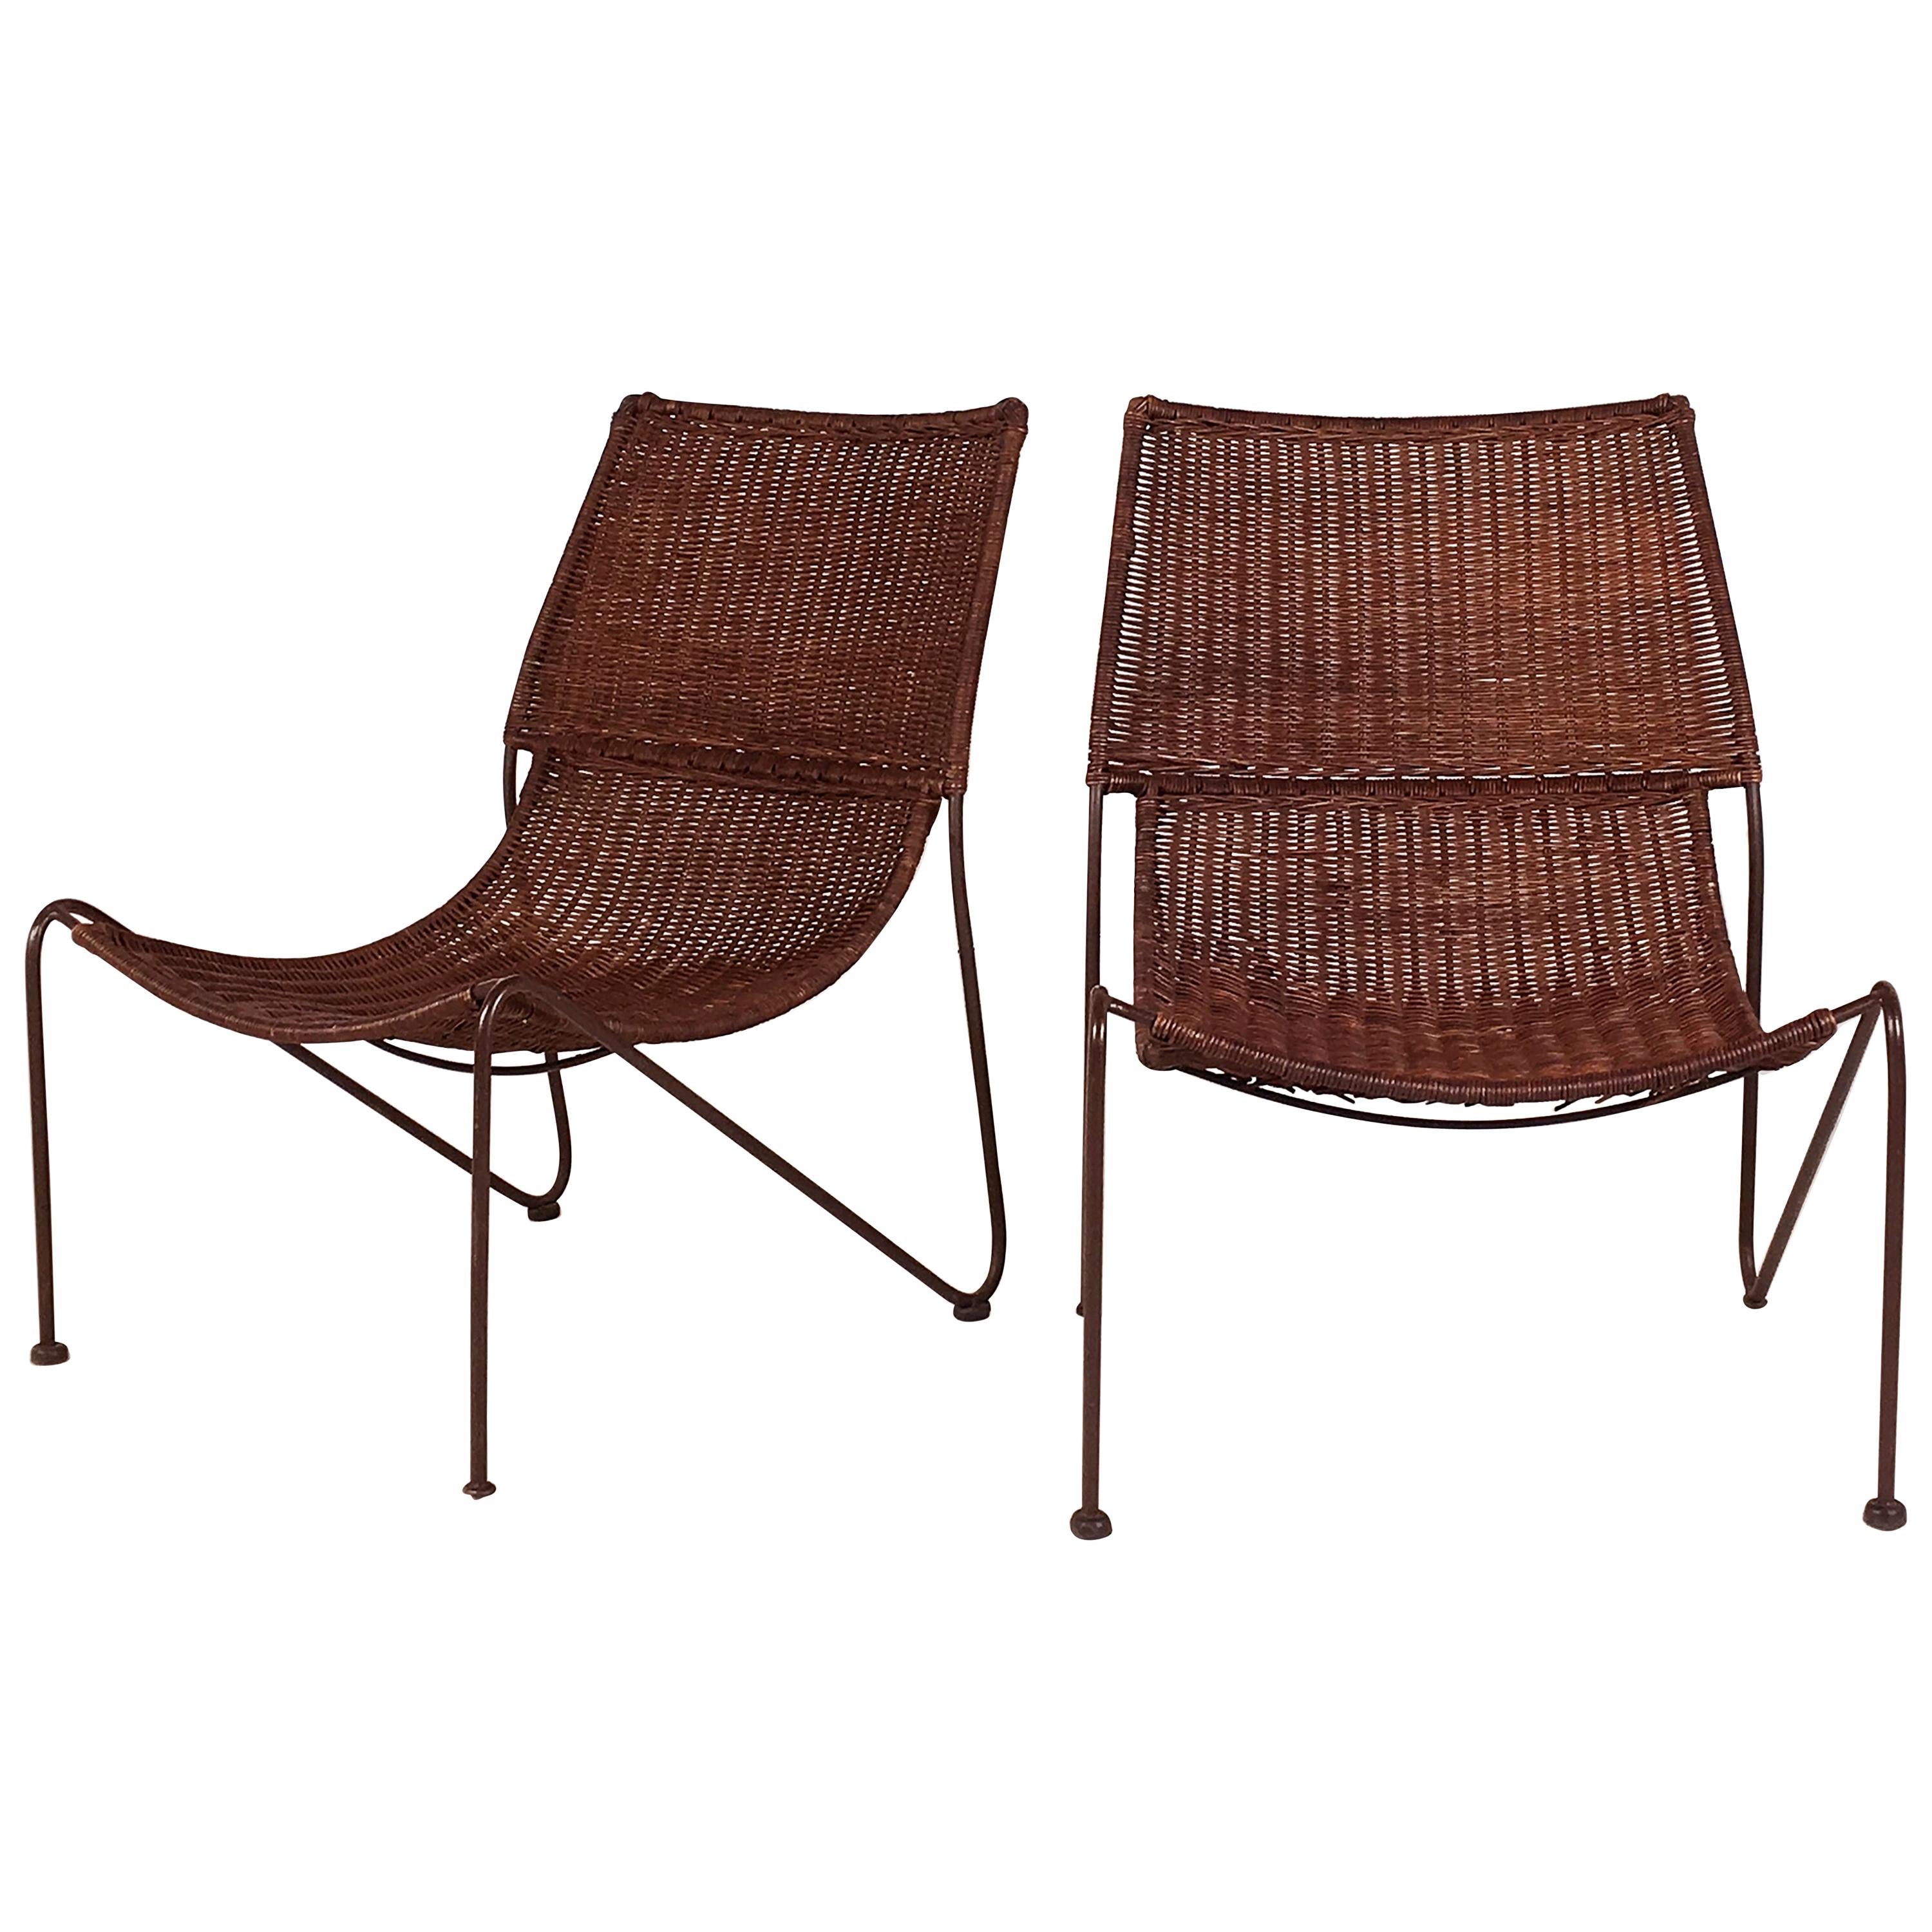 Pair of Scoop Chairs in Wicker Rattan